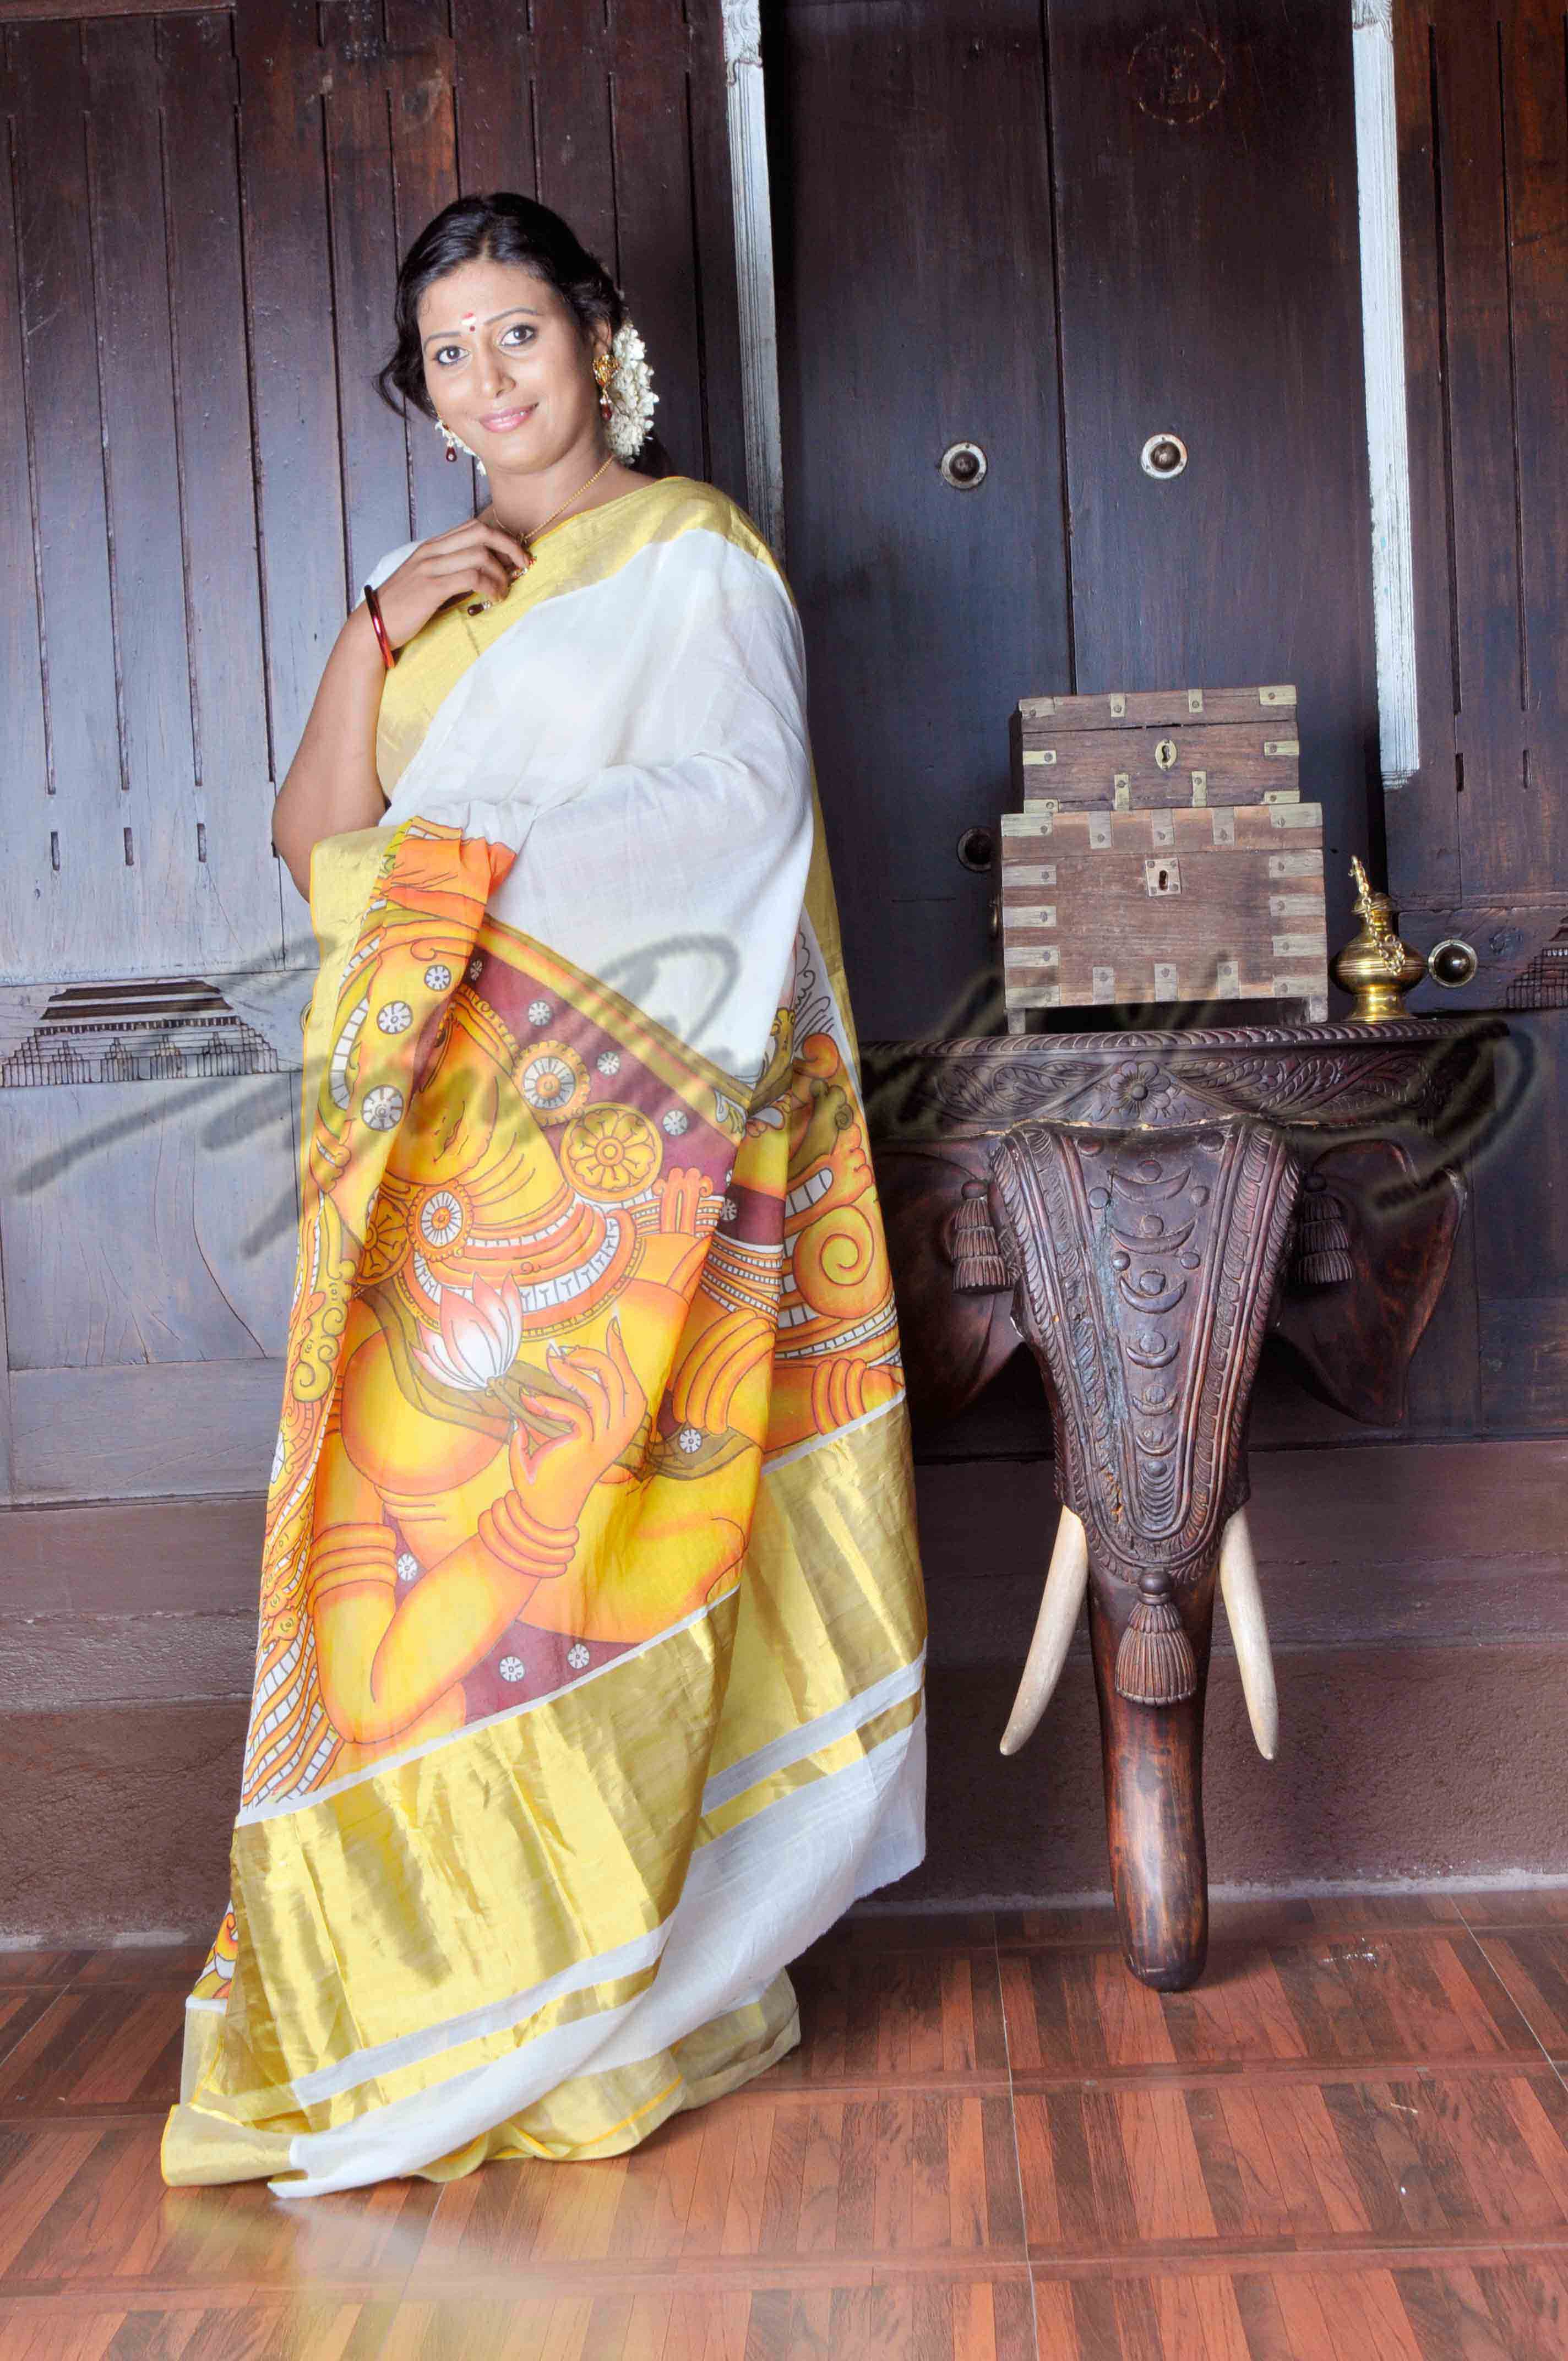 36th Photo of Saju Thuruthil Textile Designs